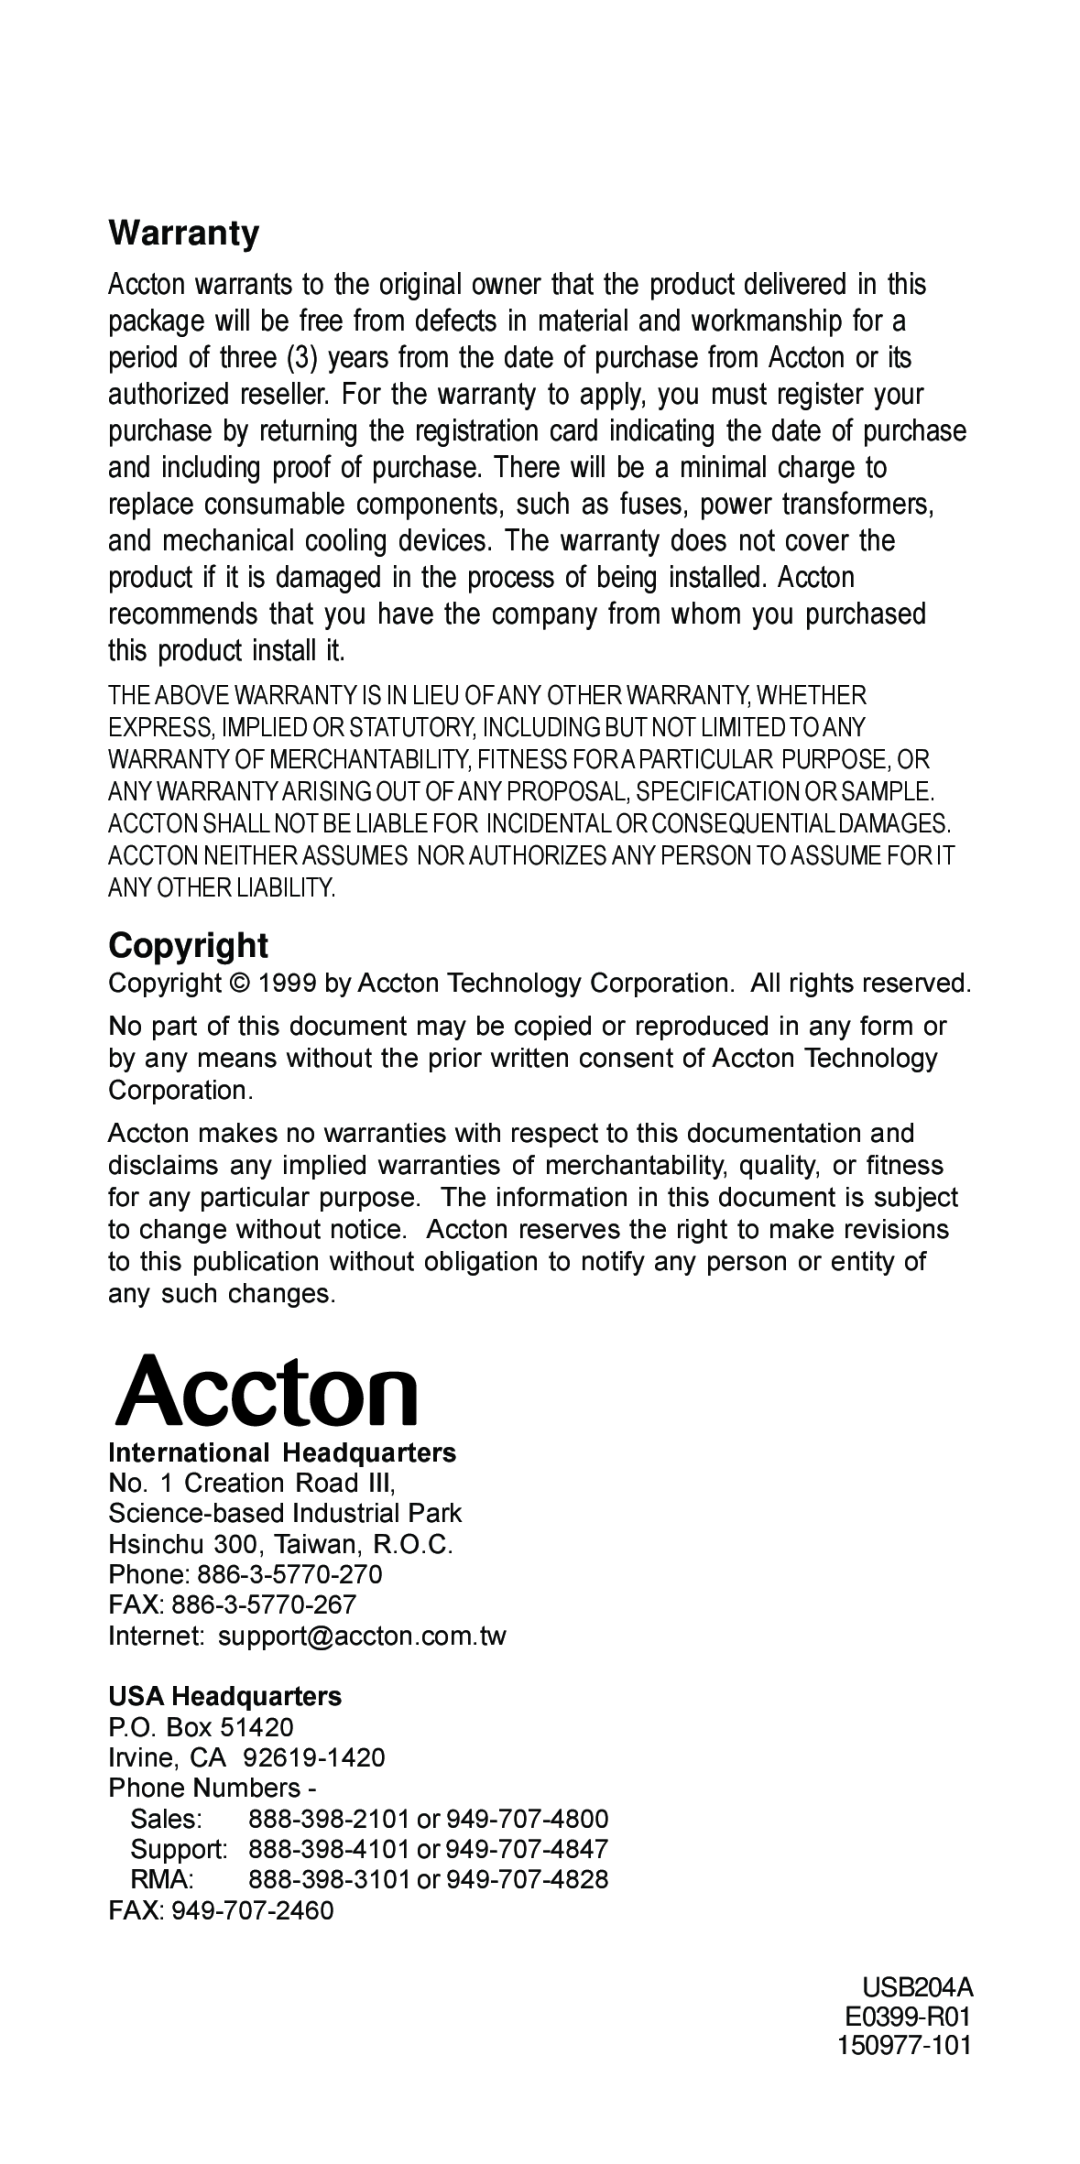 Accton Technology USB204A manual USB Hub Warranty, Copyright, International Headquarters, USA Headquarters 